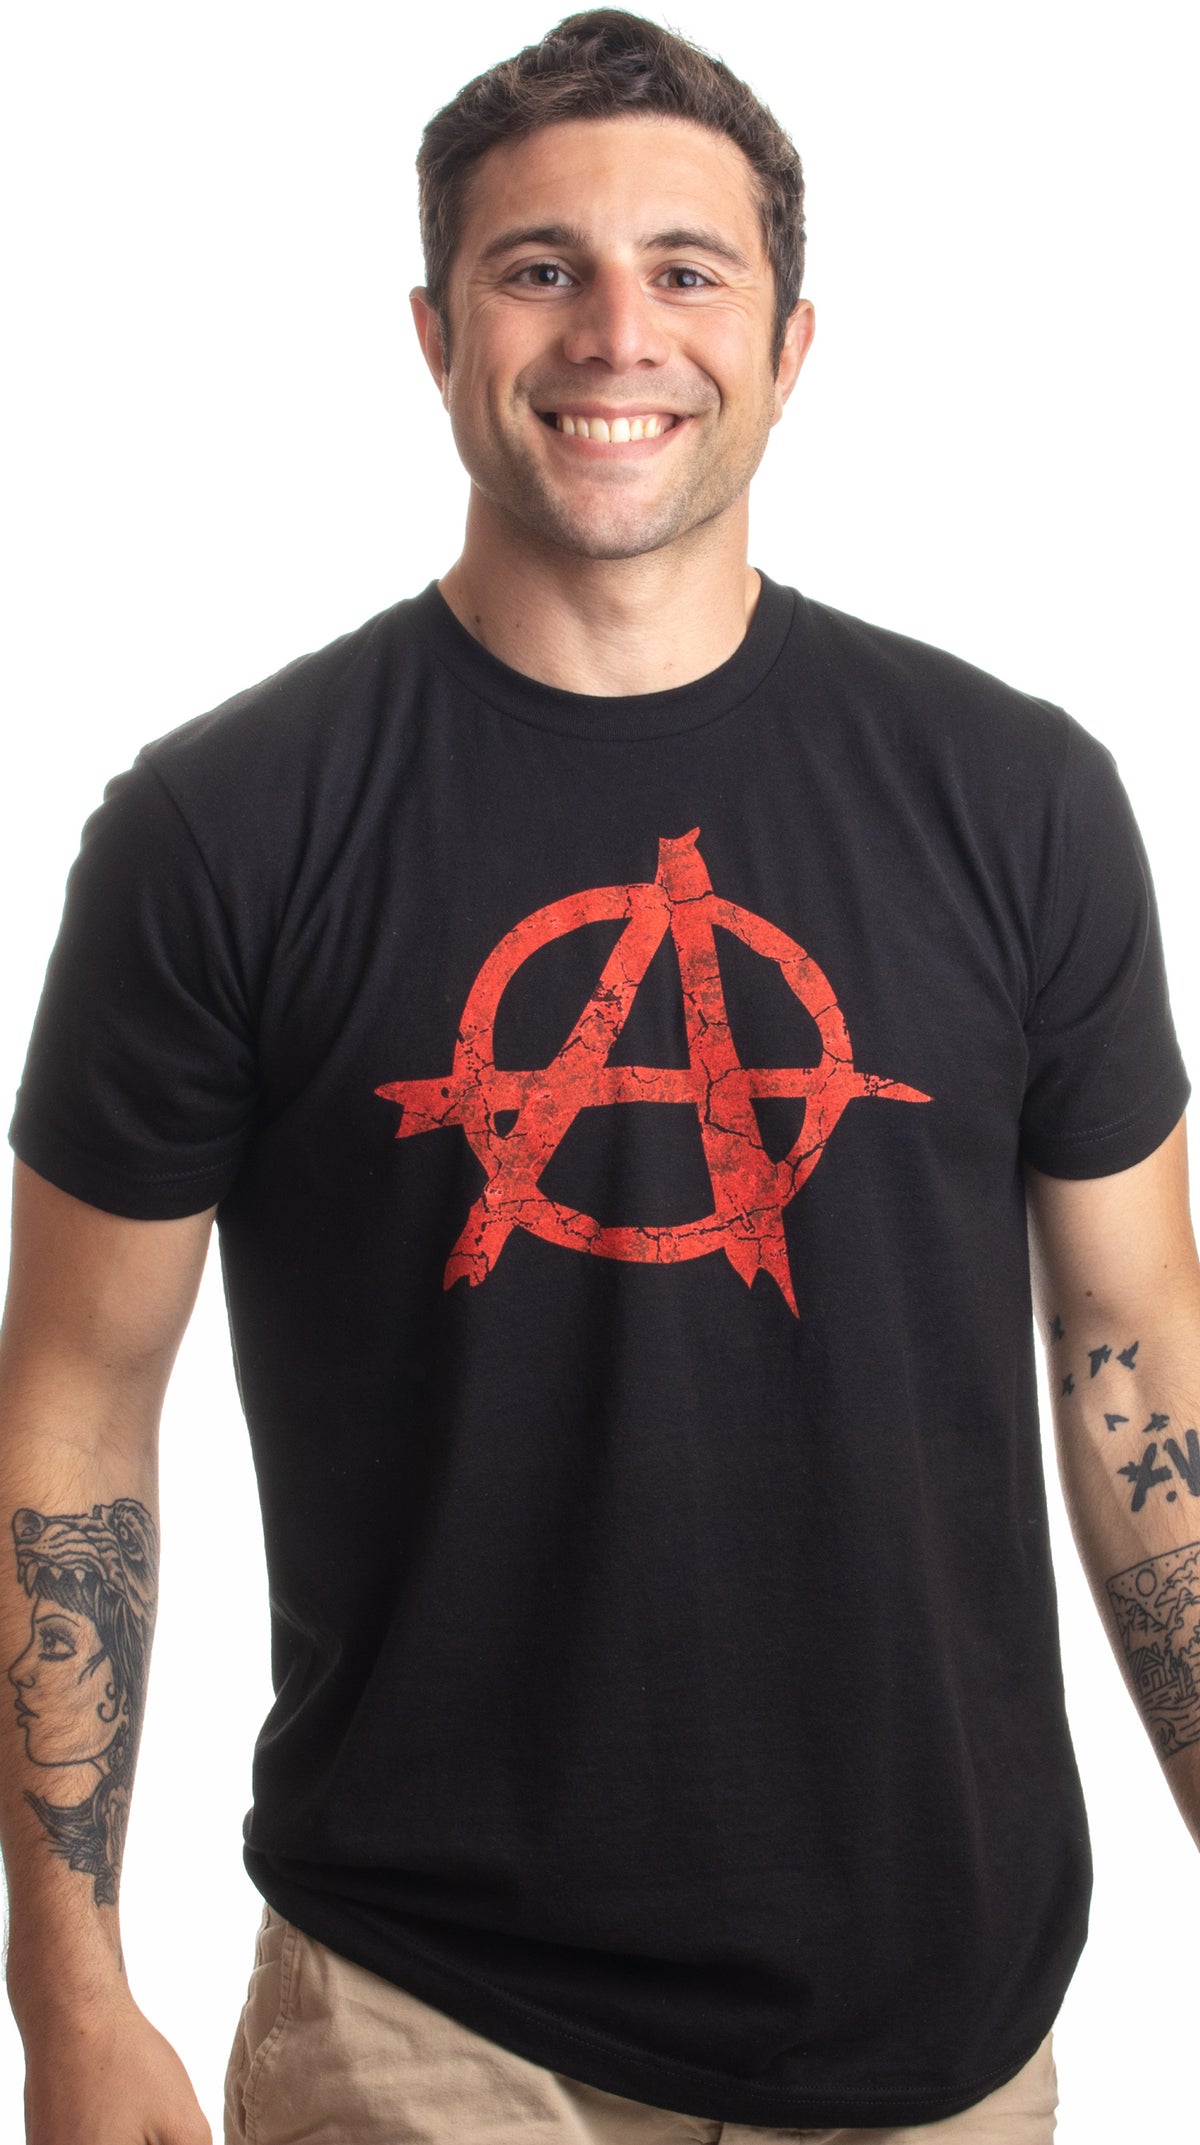 Anarchy | Distressed Anarchist Punk Riot Disorder Men Women Black Revel T-shirt